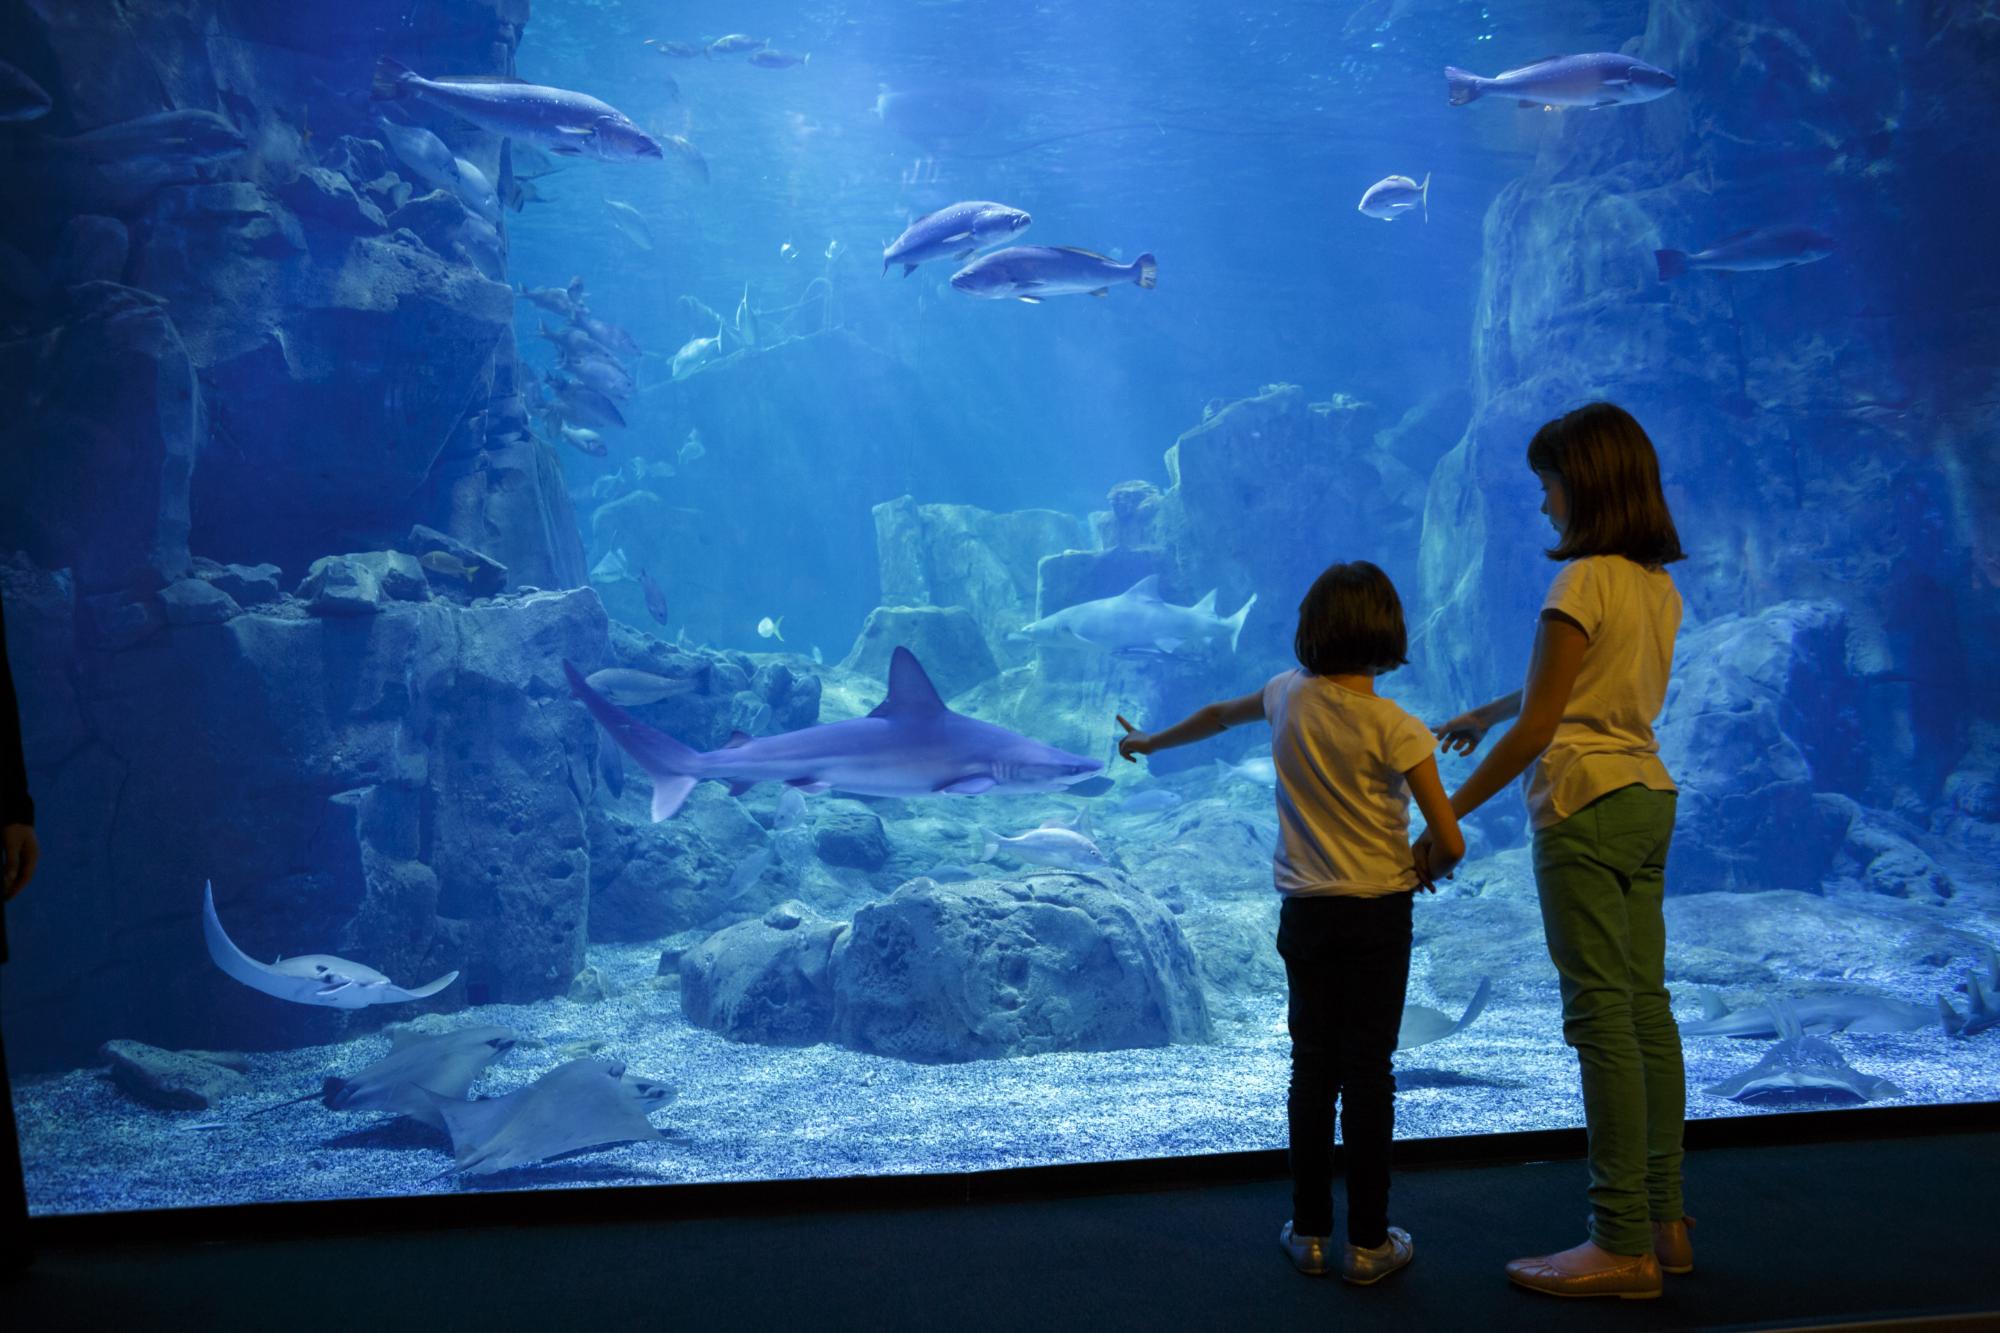 Girls looking at the fish in an aquarium